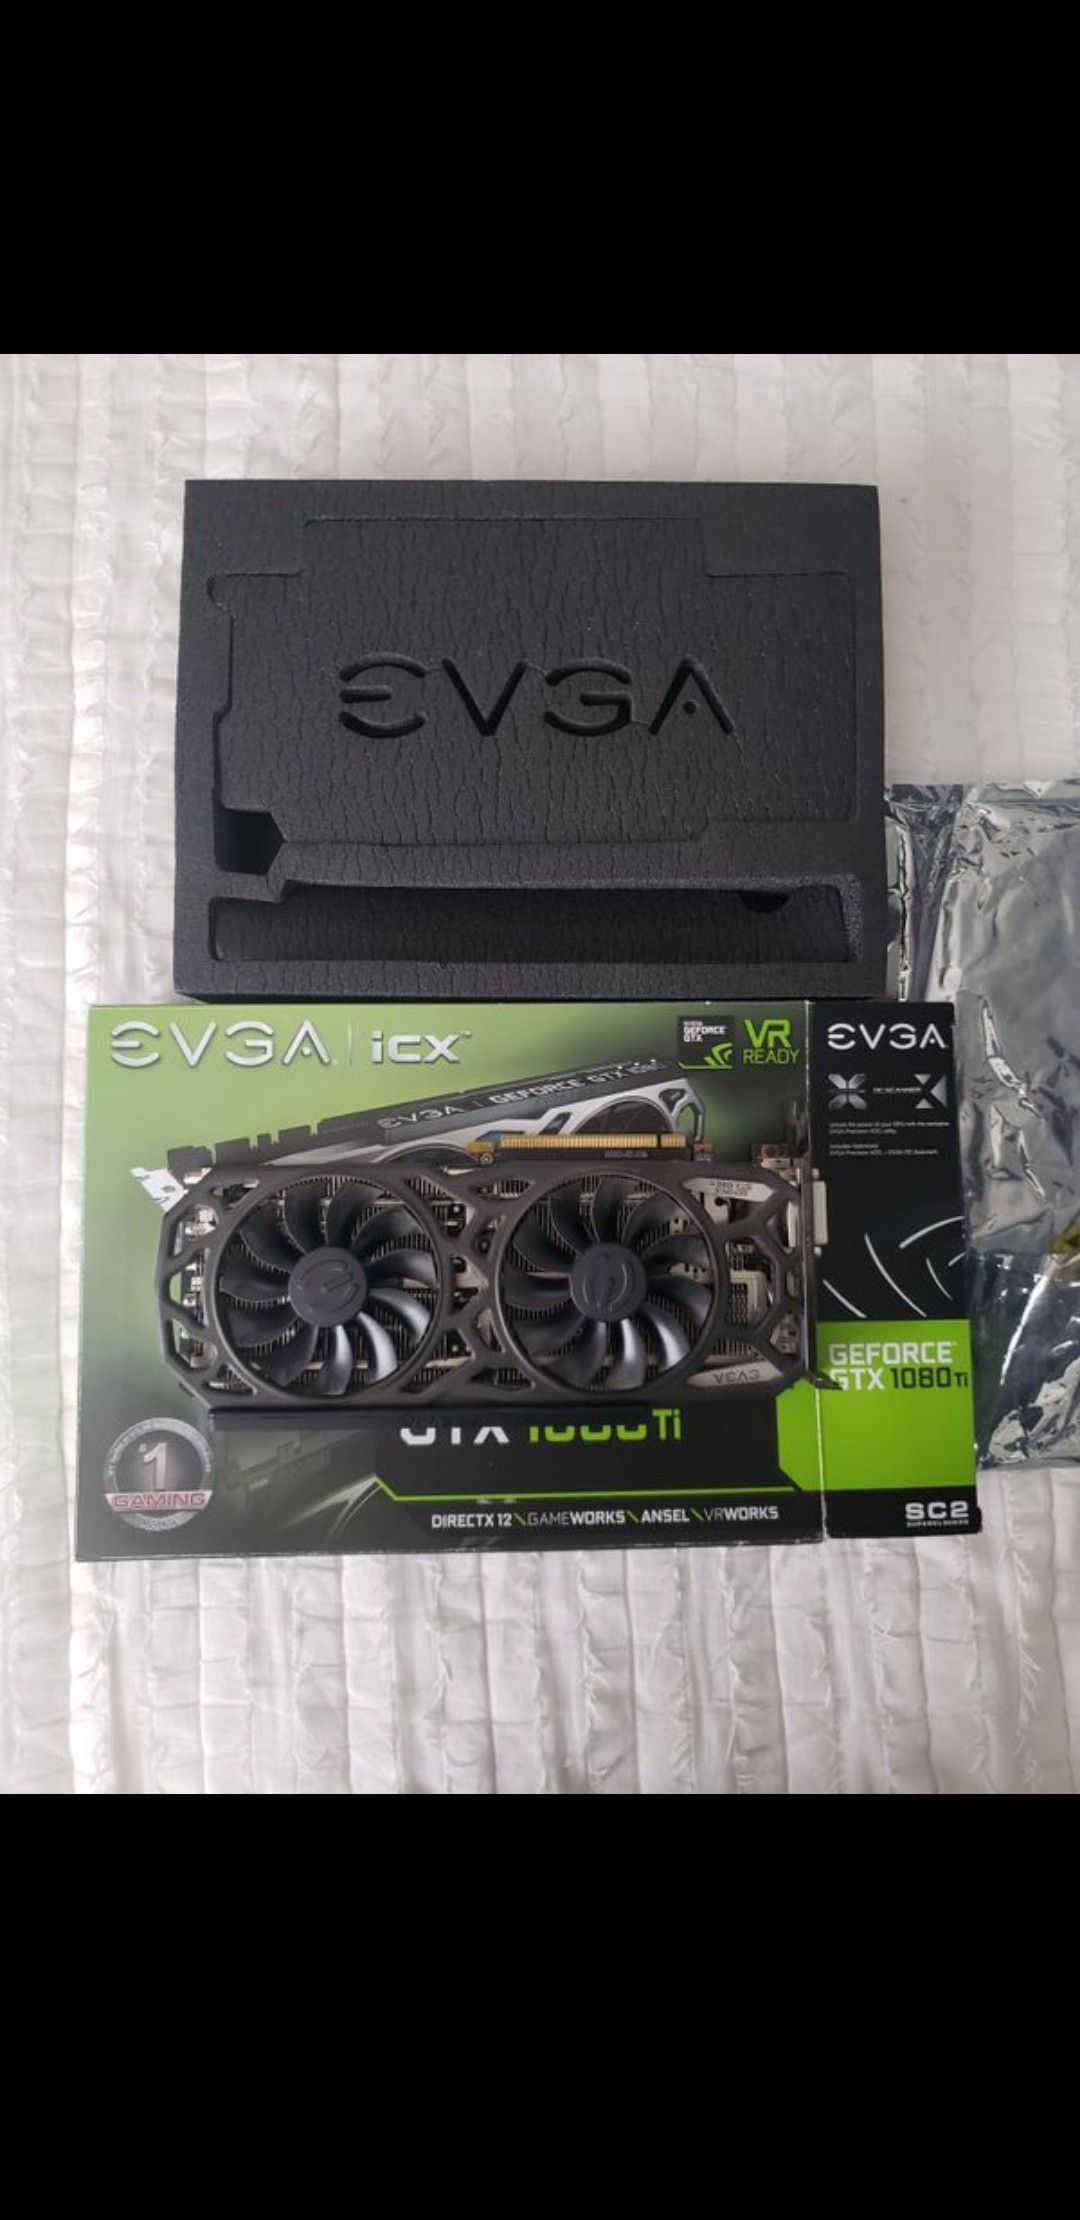 EVGA GTX 1080 Ti SC iCX GPU for Sale in Phoenix, AZ - OfferUp